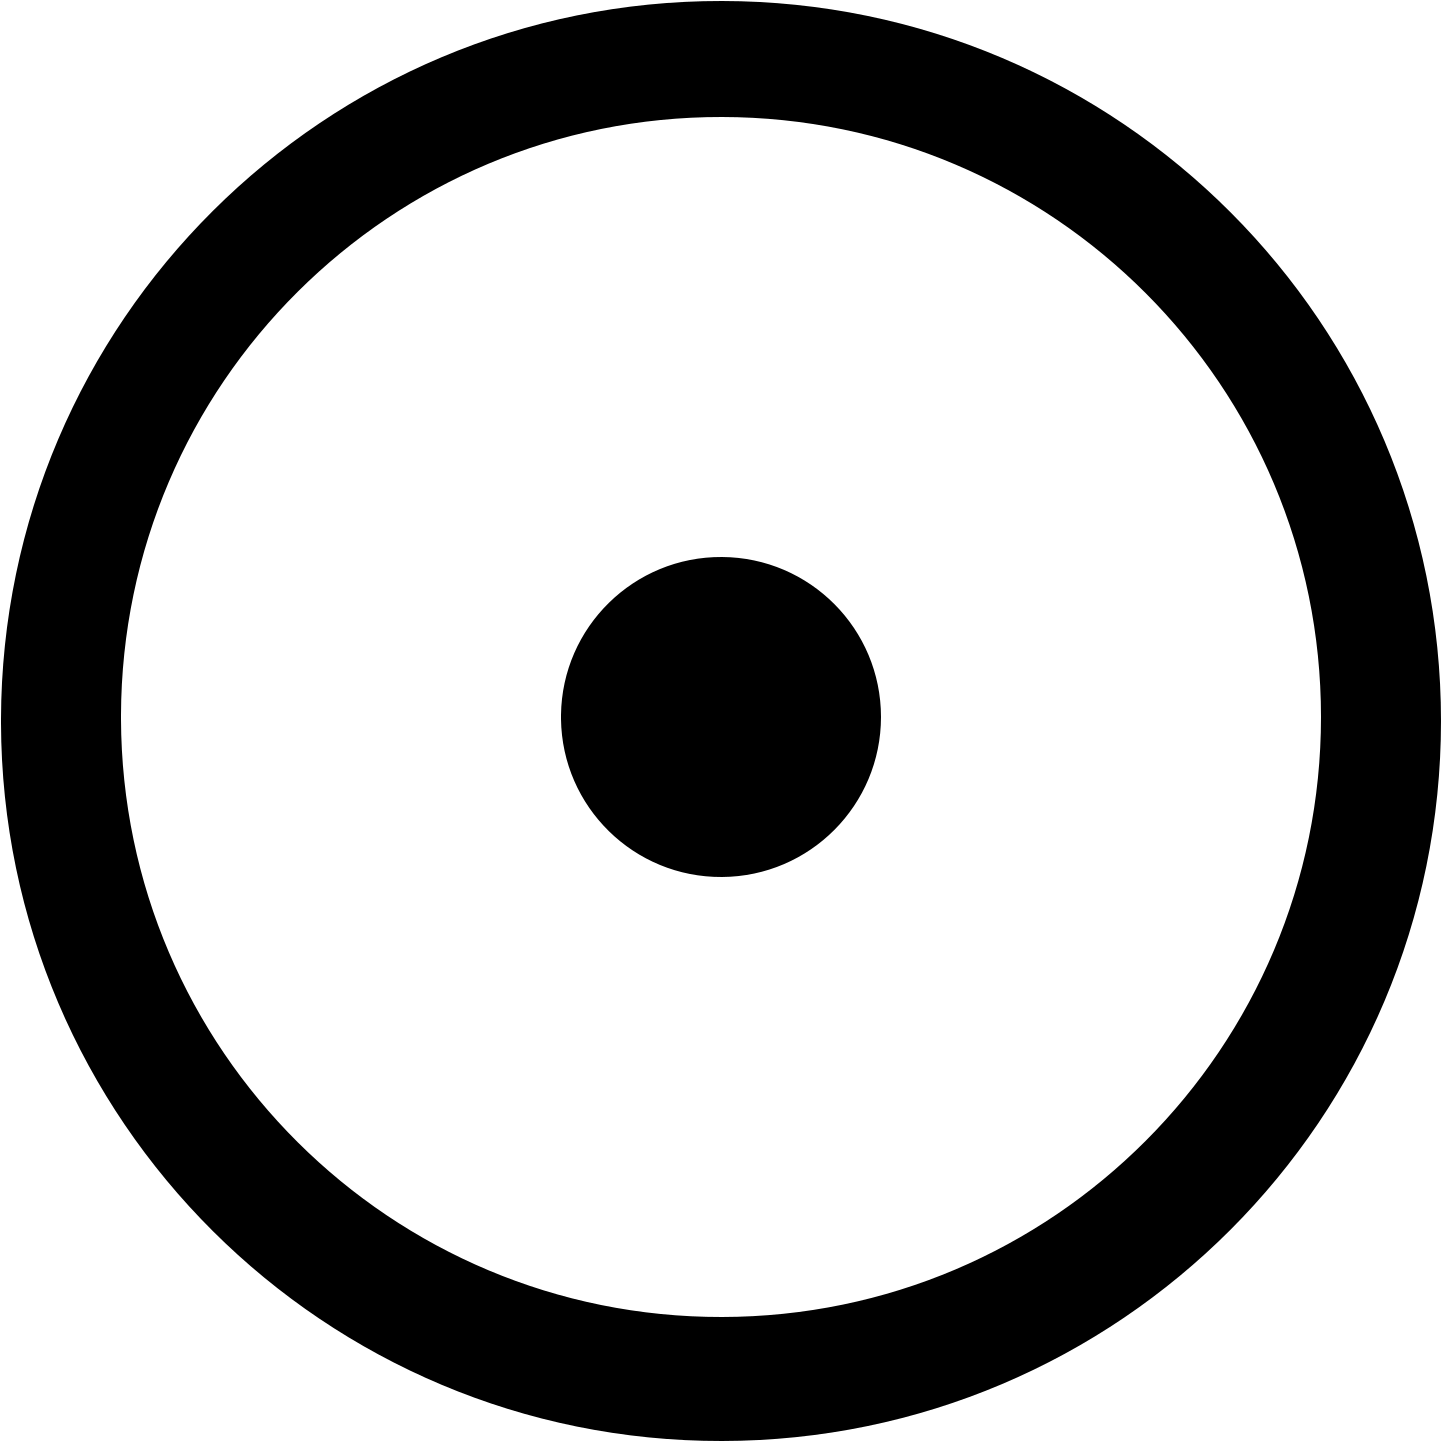 Open - Symbol For The Sun (2000x2000)